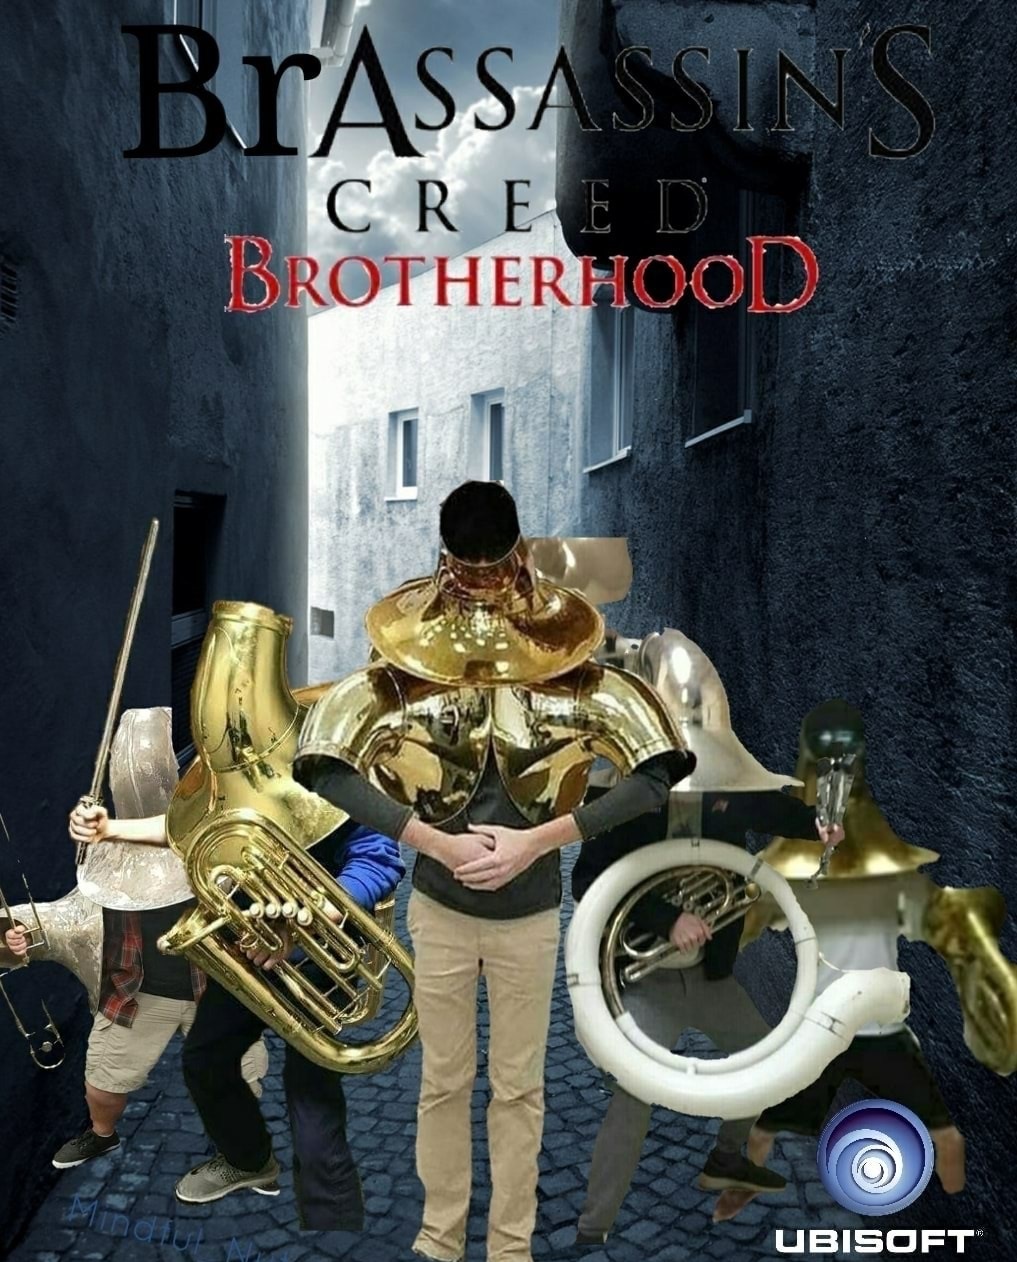 metal - BrassA Sins Cre E Del Brotherhood Mind Ubisoft